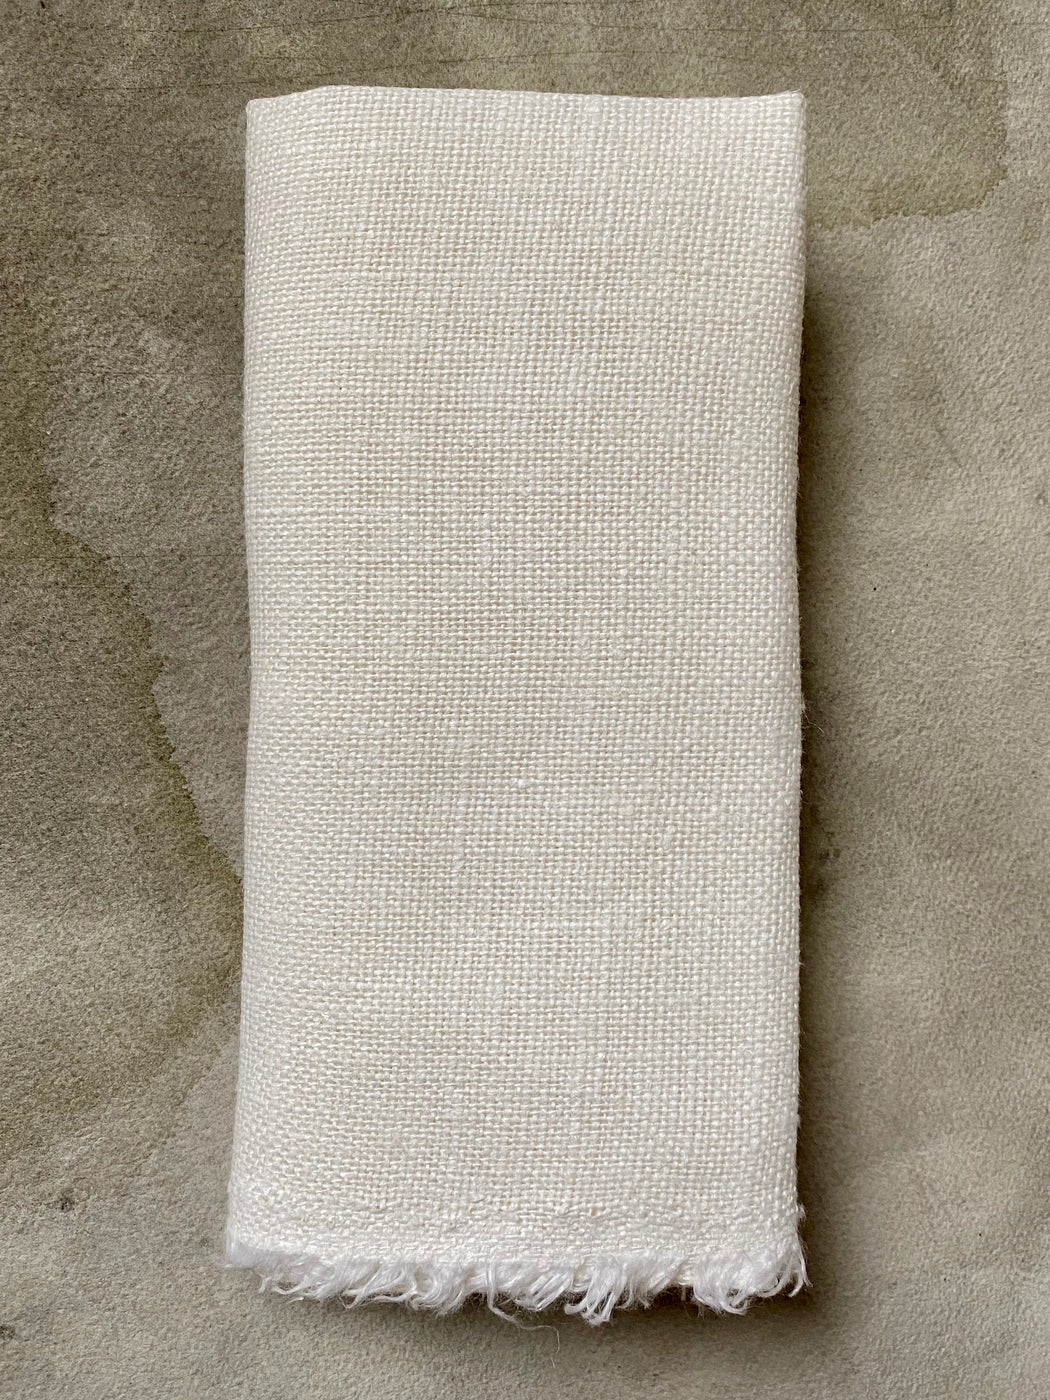 Axlings Ivory Linen Tea Towels - Set of 2